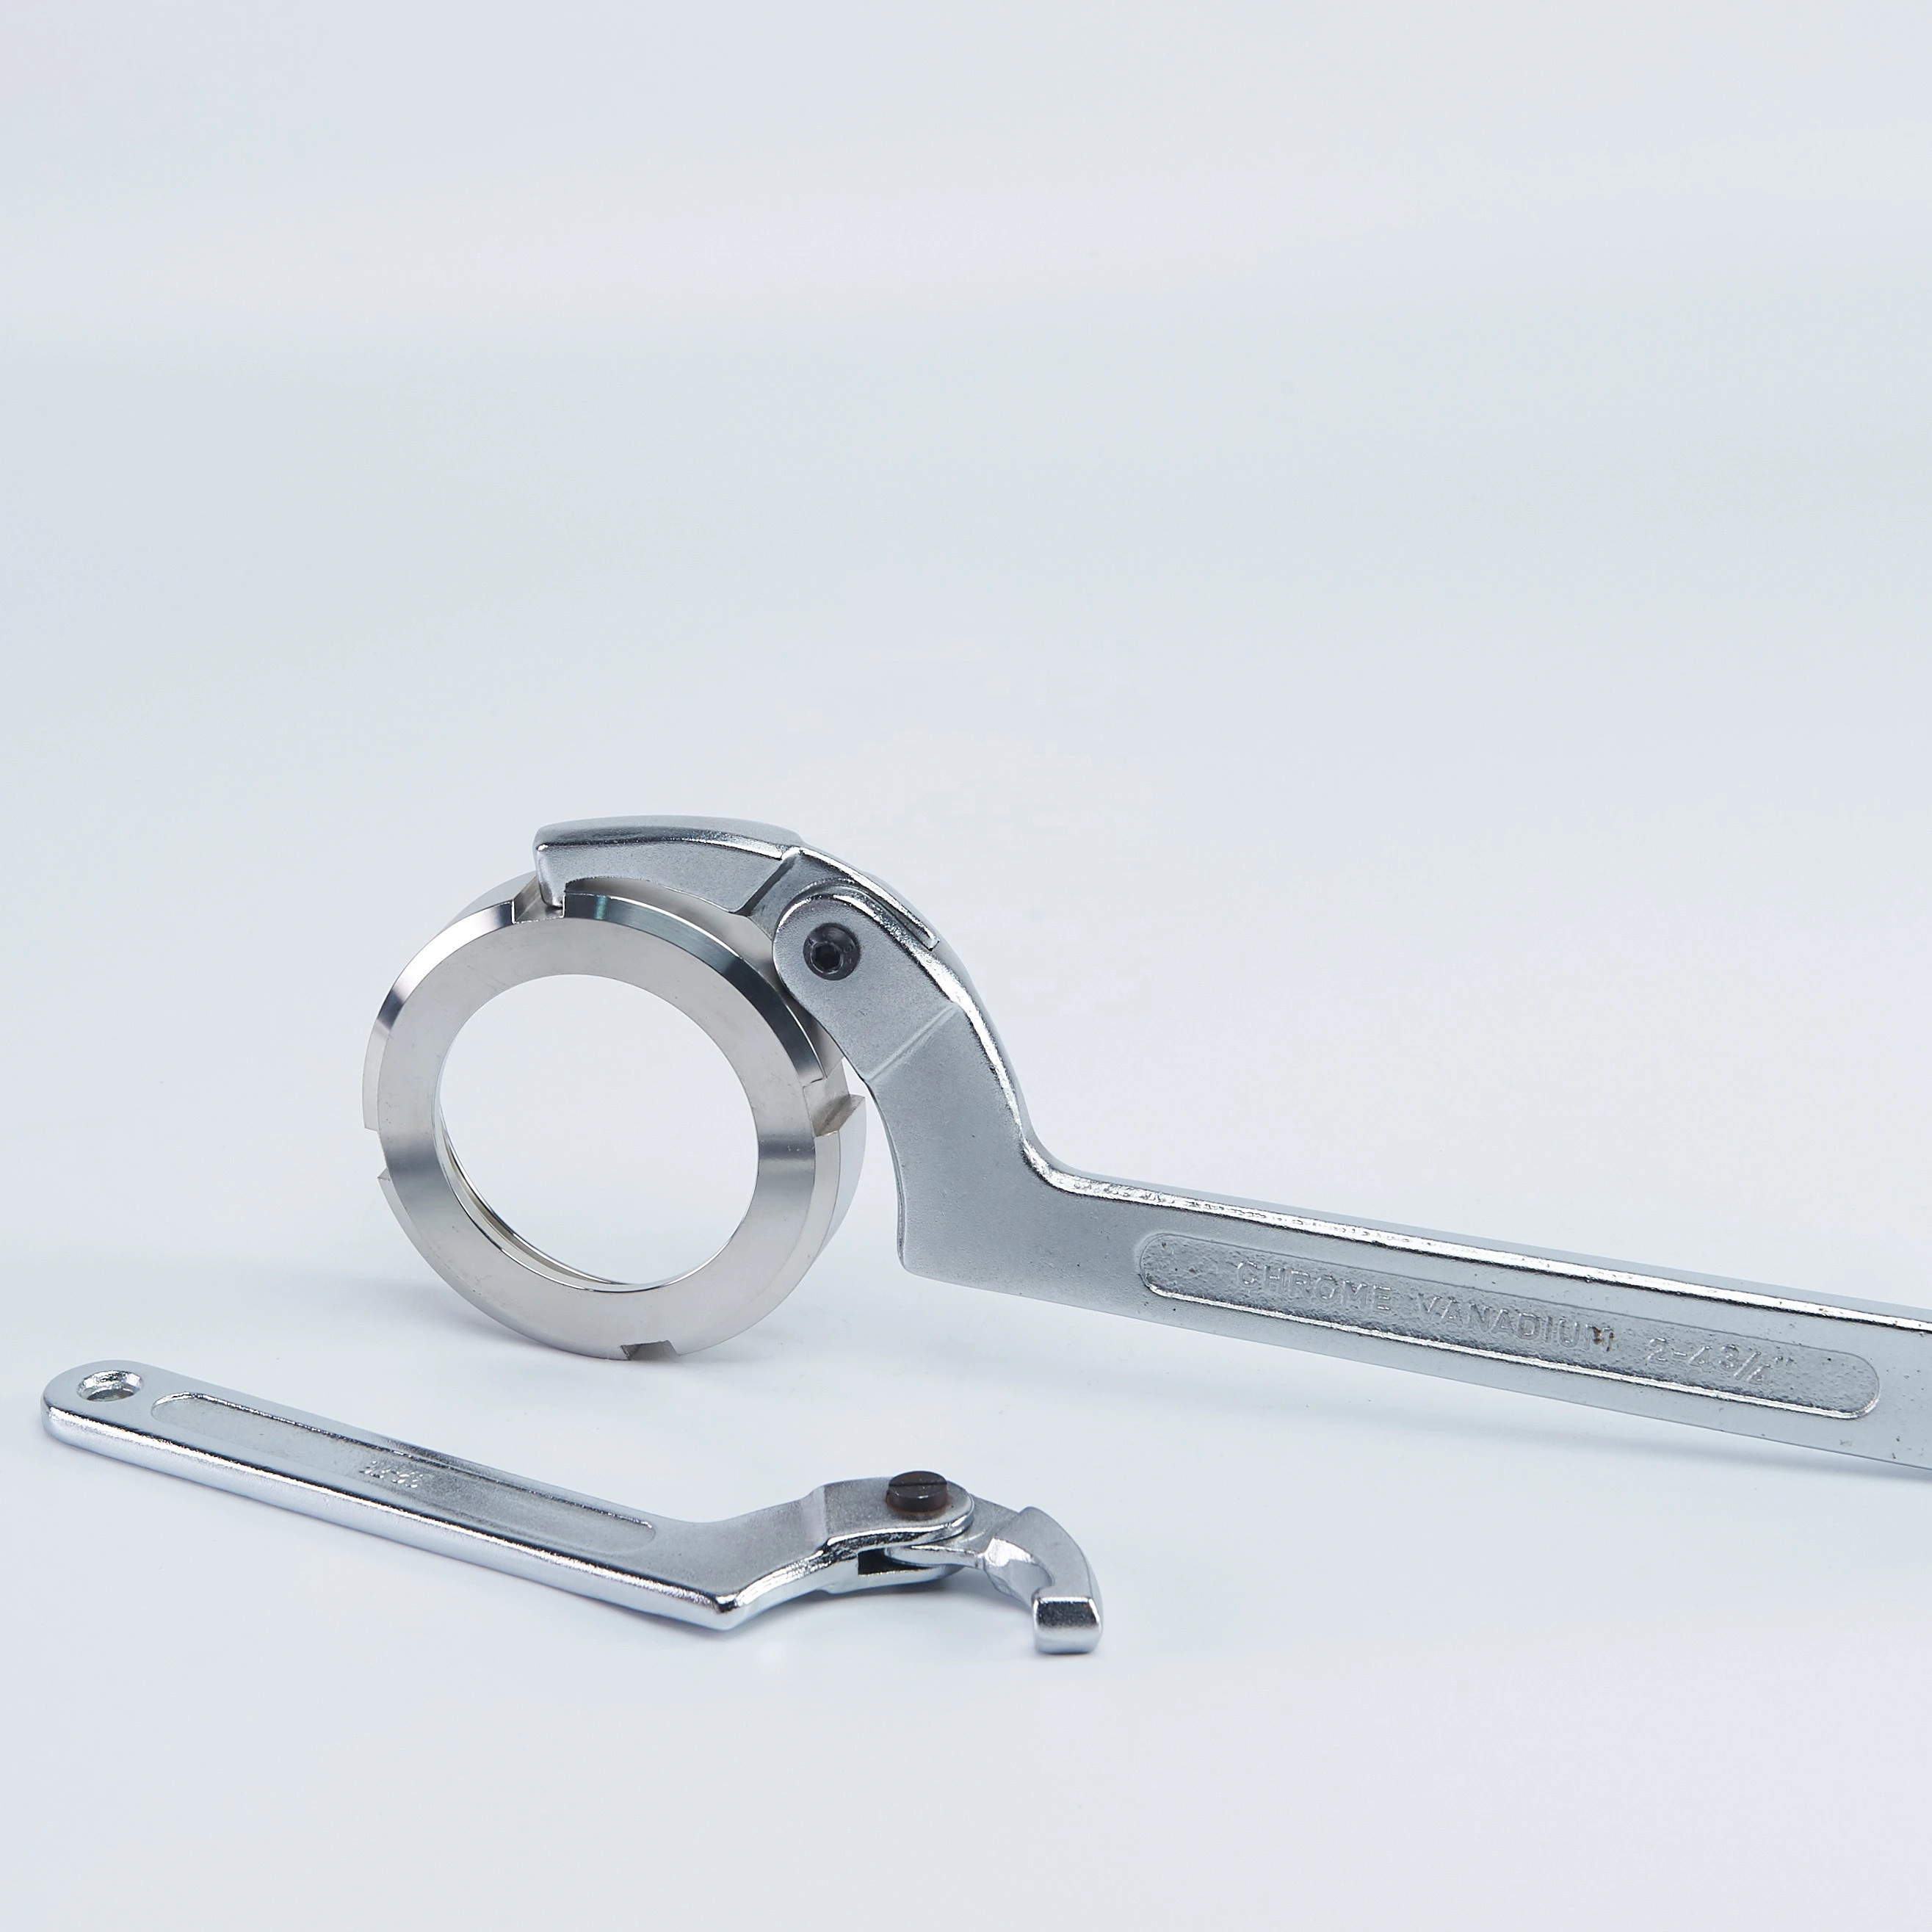 Stainless Steel/Chrome-Vanadium Steel Adjustable C-Hook Spanner,Union Wrench